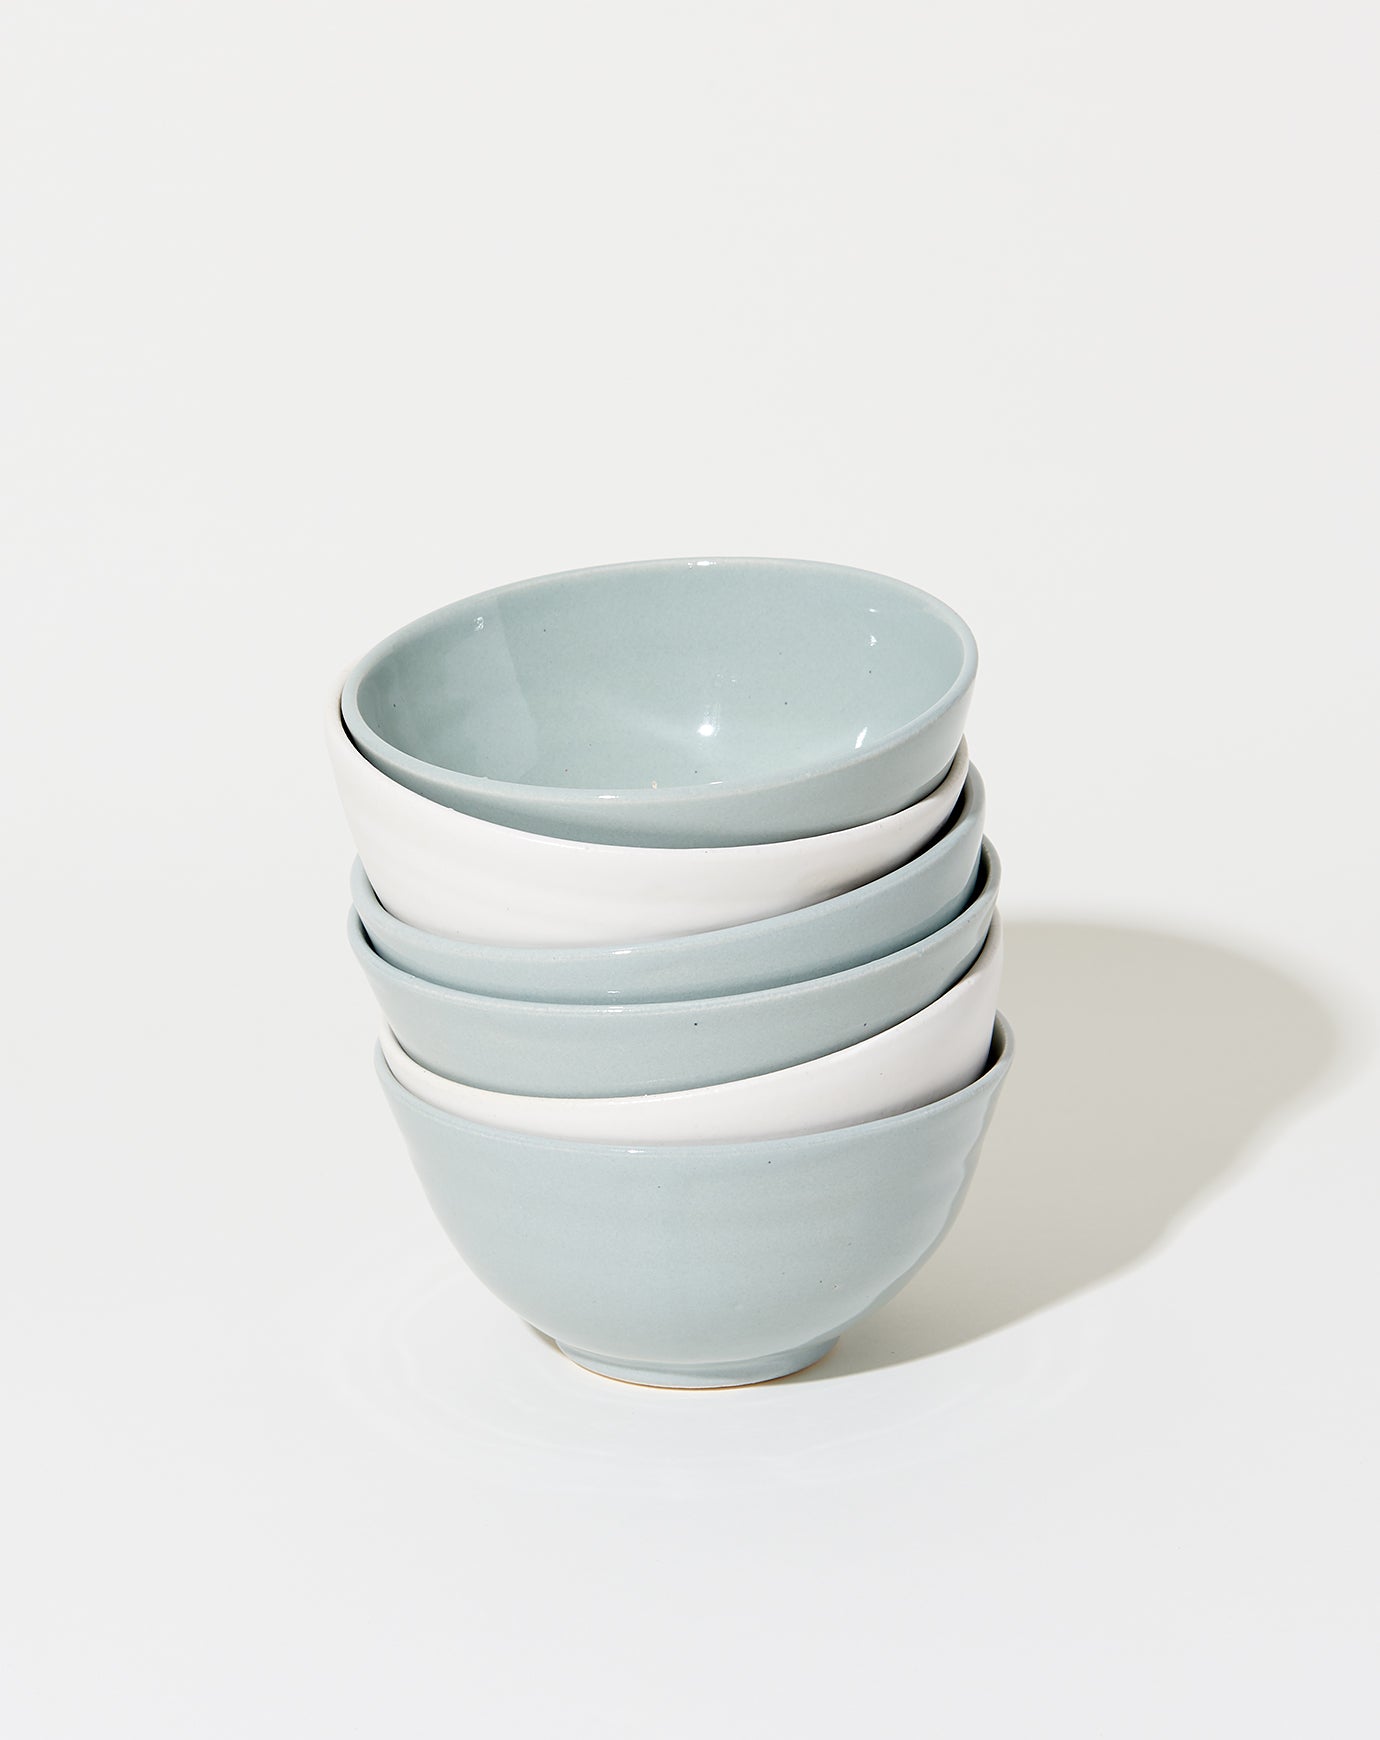 Sheldon Ceramics Farmhouse Dessert Bowl in Serenity Blue